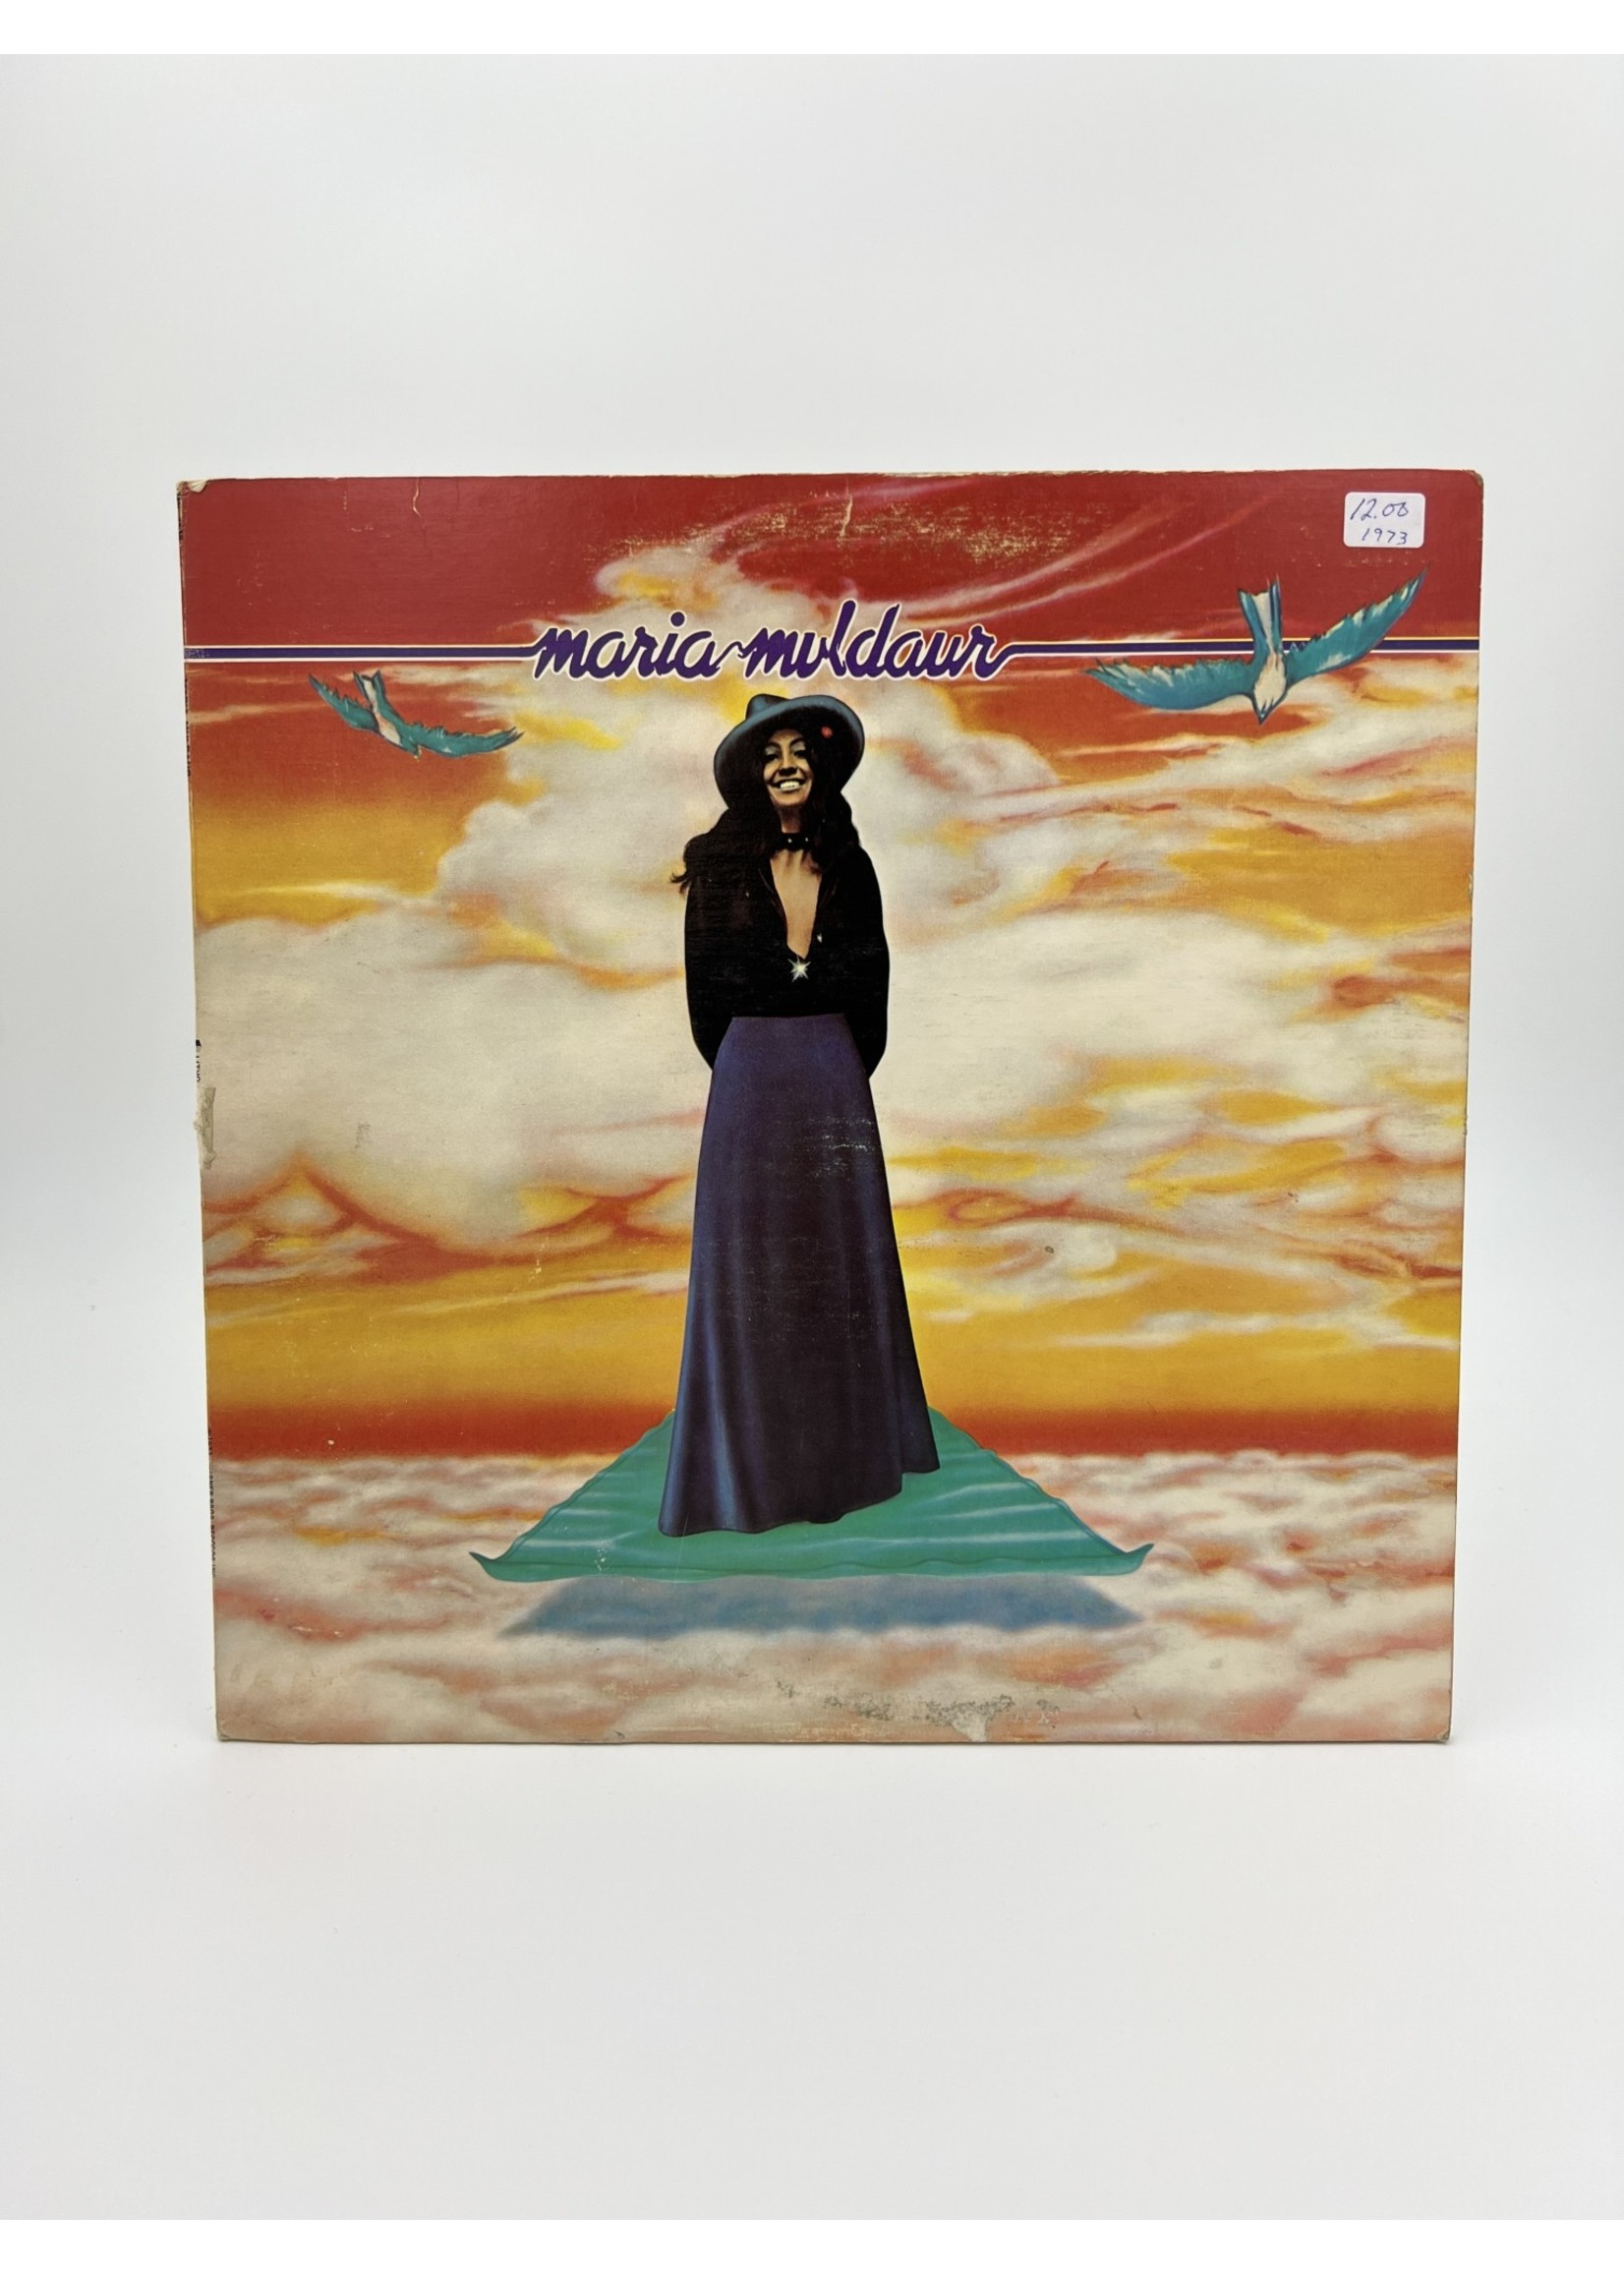 LP Maria Muldaur LP RECORD